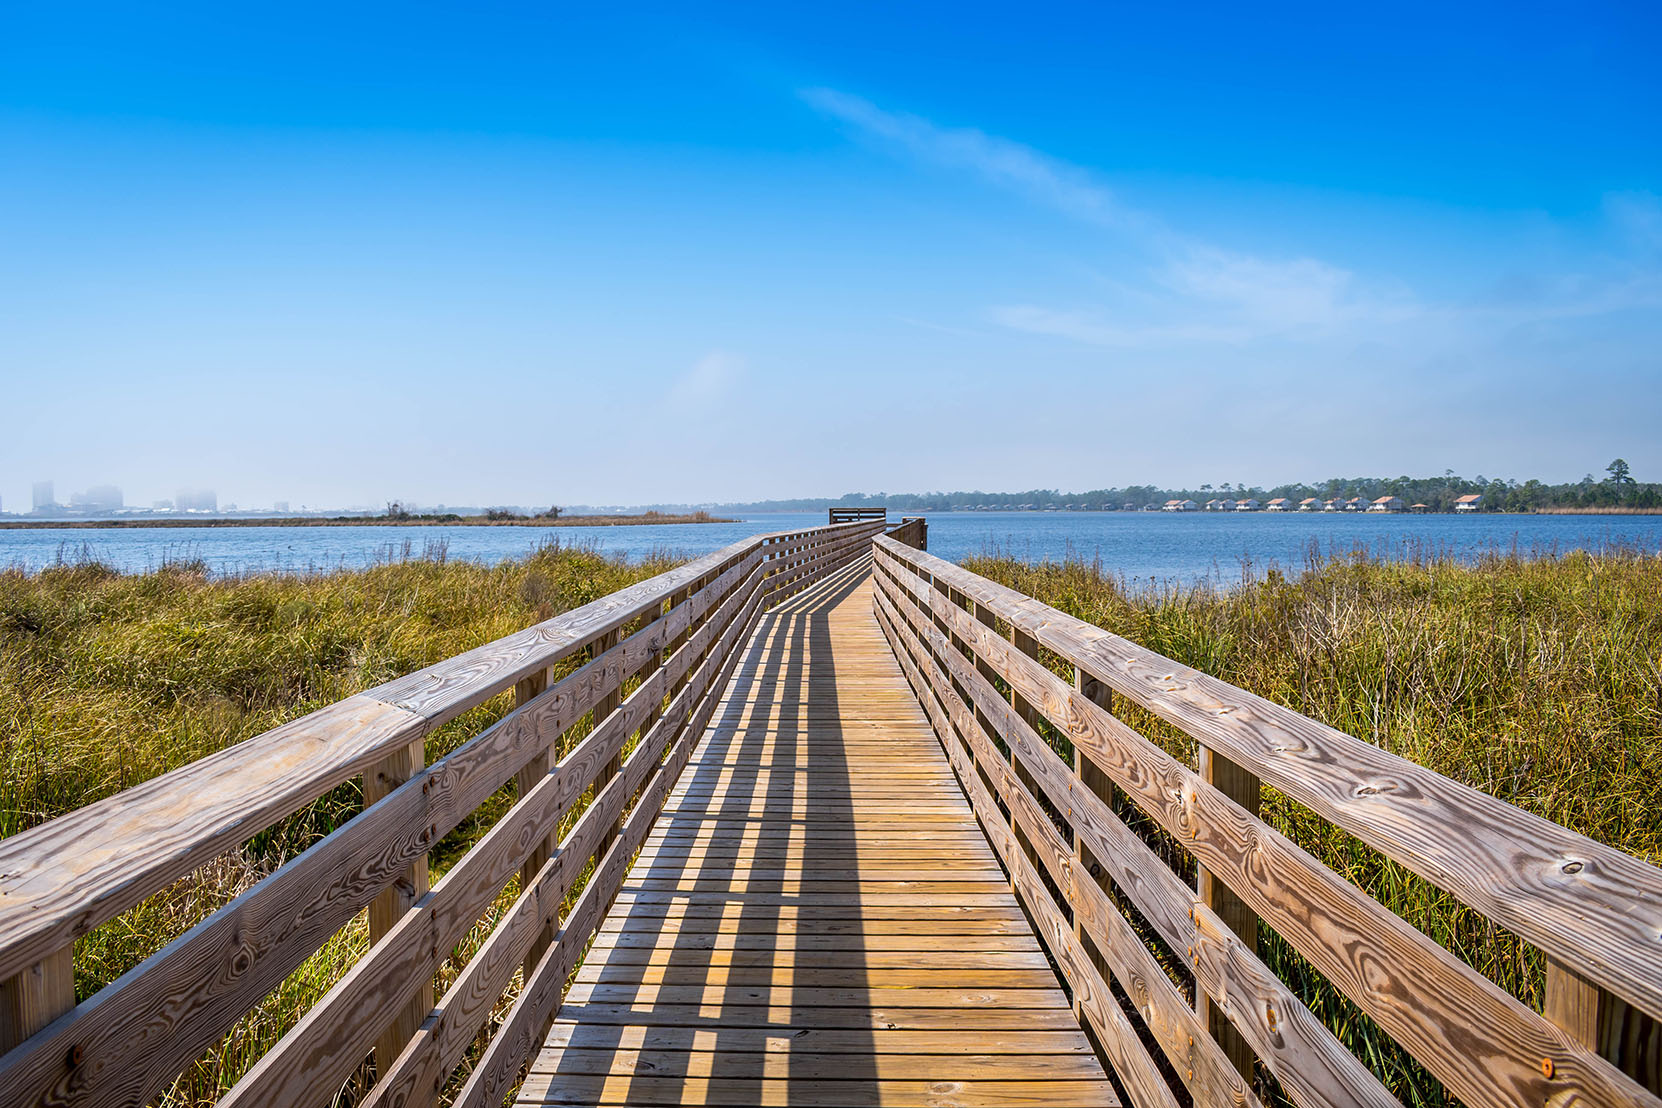 A long boardwalk stretches toward the sea under a blue sky.